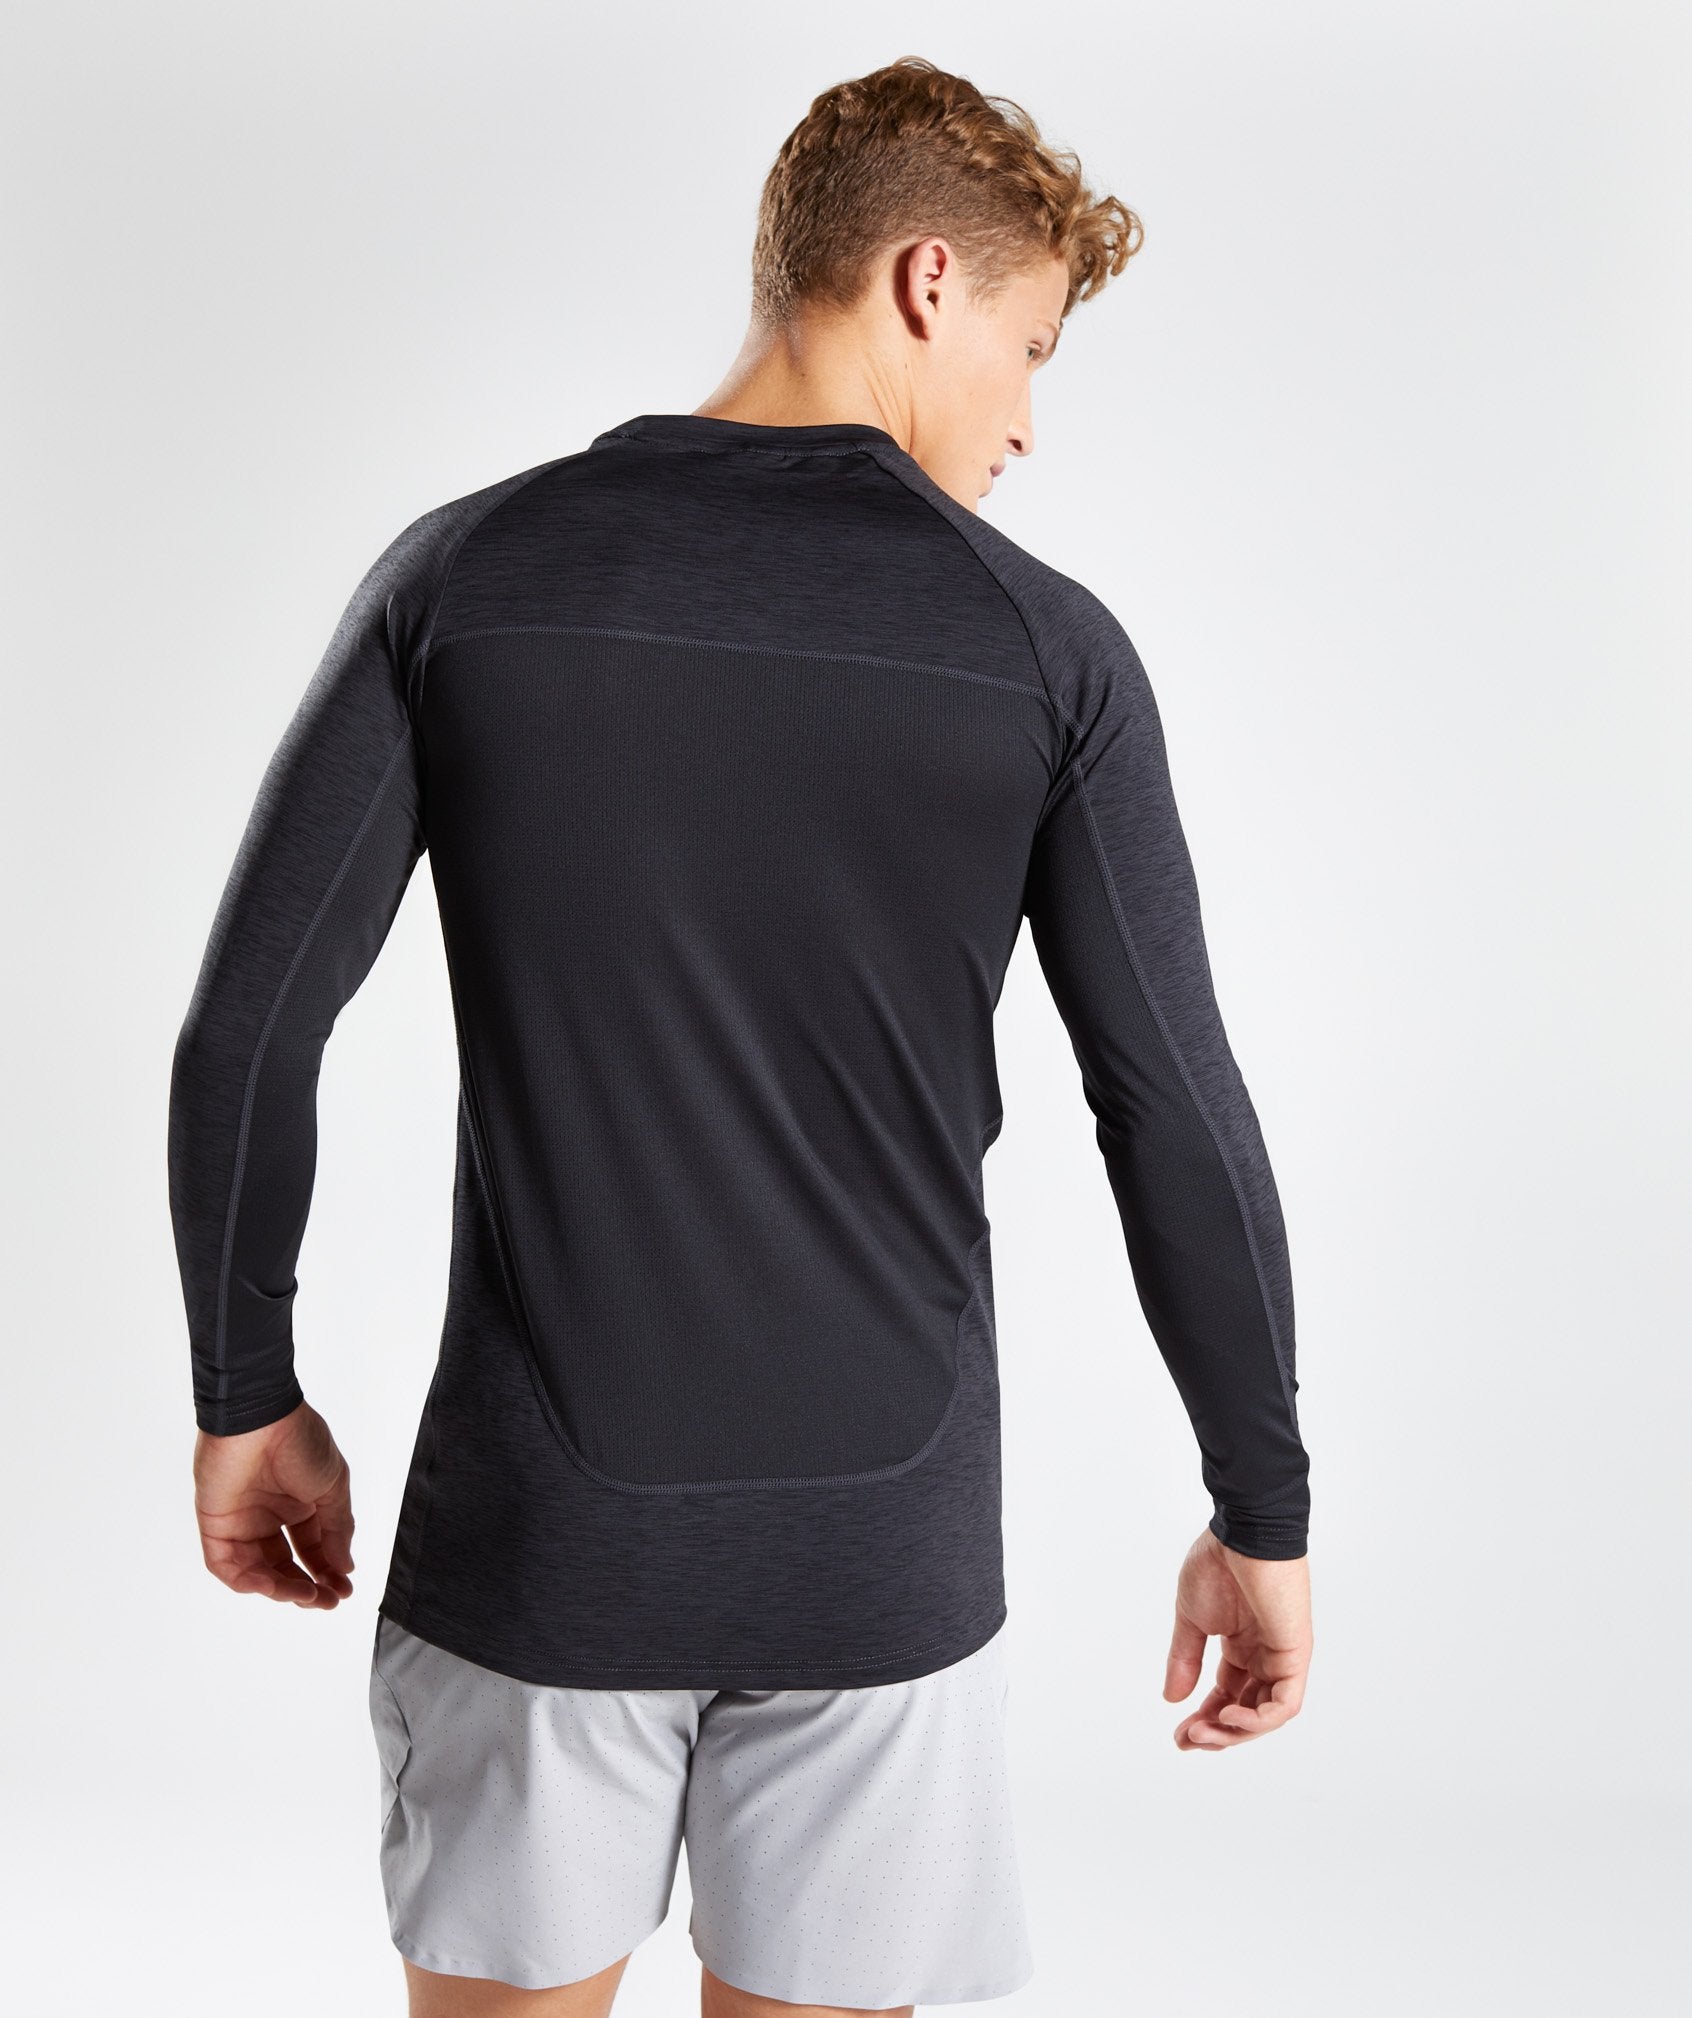 Vertex Long Sleeve T-Shirt in Black Marl - view 2